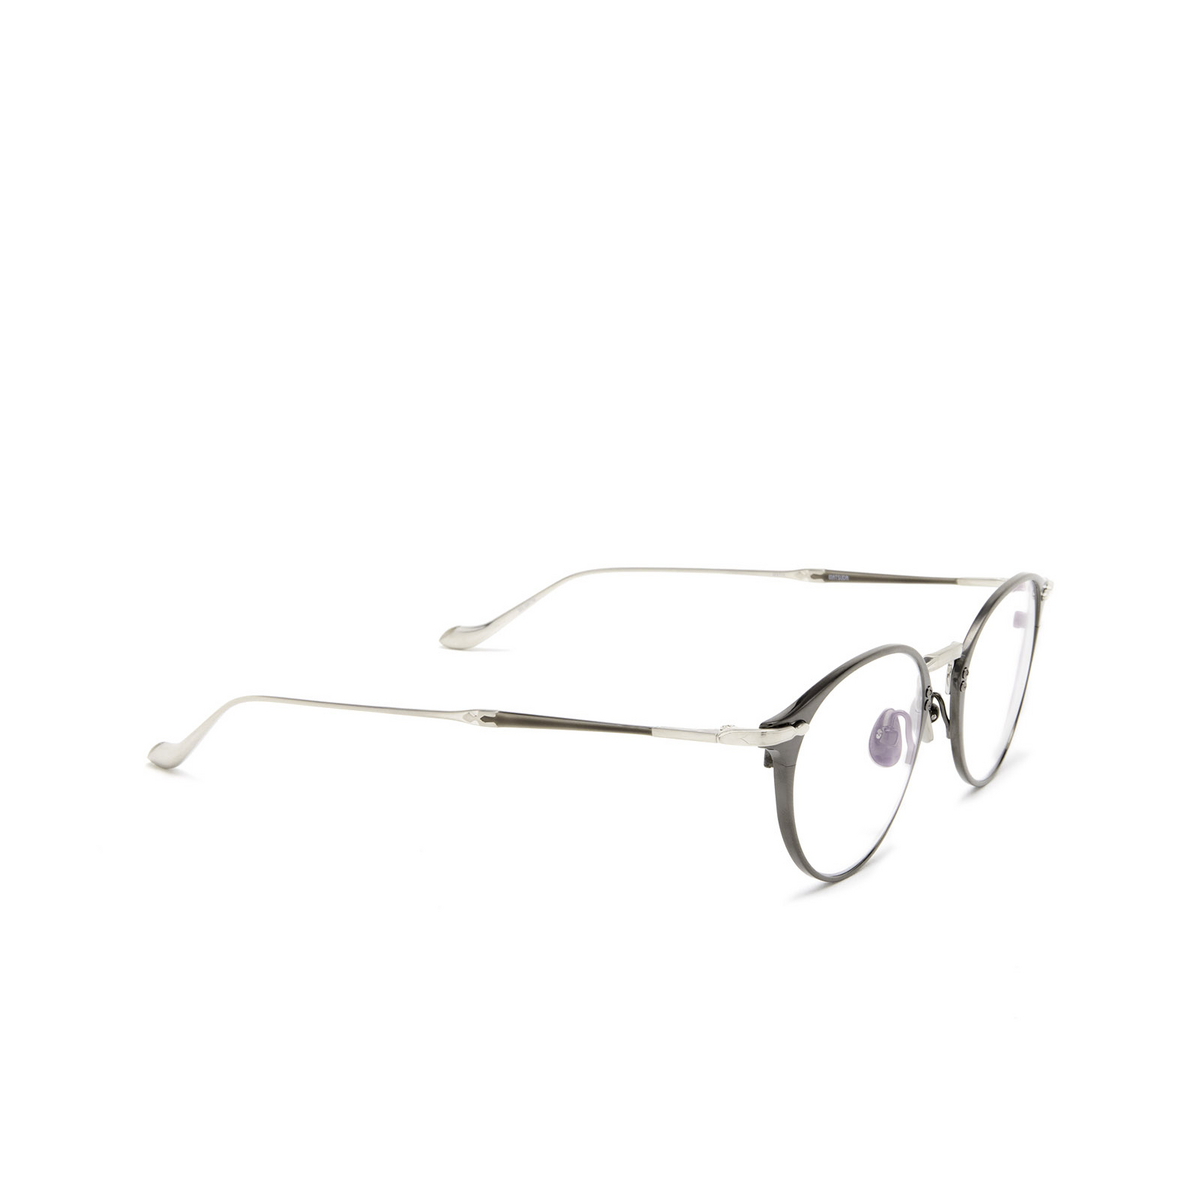 Matsuda® Round Eyeglasses: M3112 color Brushed Silver - Brushed Ruthenium Bs-brtm - three-quarters view.